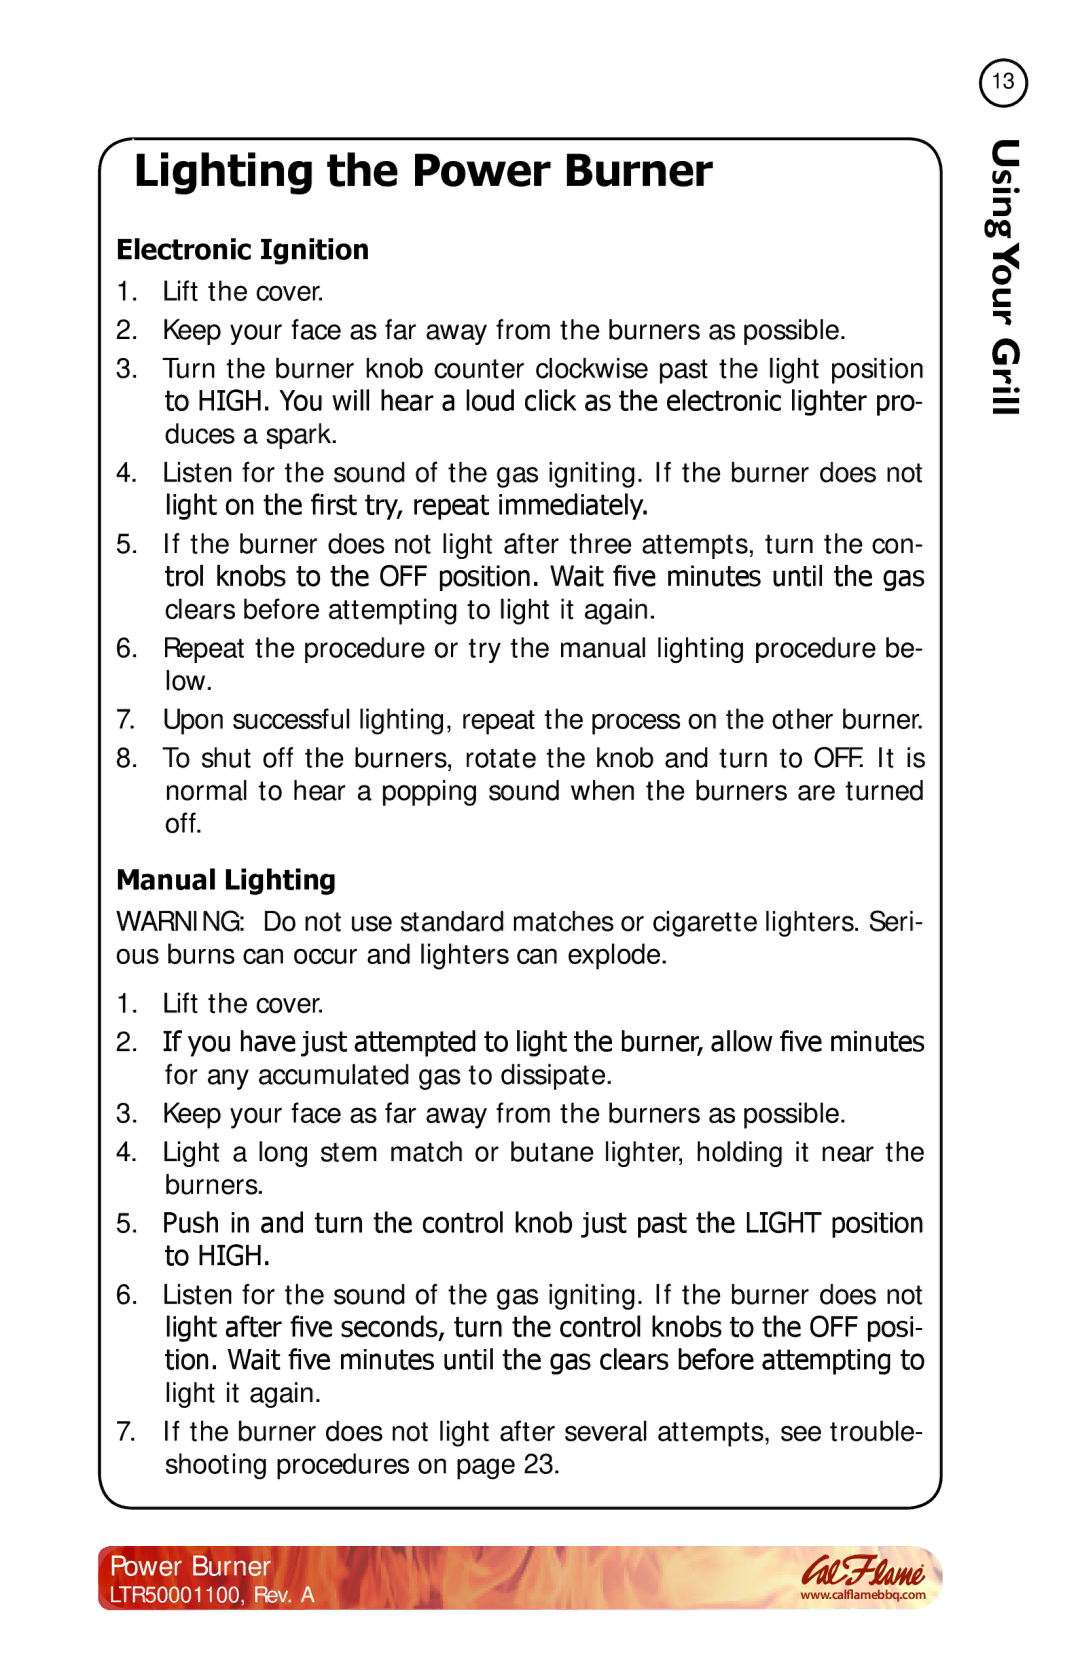 Cal Flame BBQ11955P manual Lighting the Power Burner, Electronic Ignition, Manual Lighting 